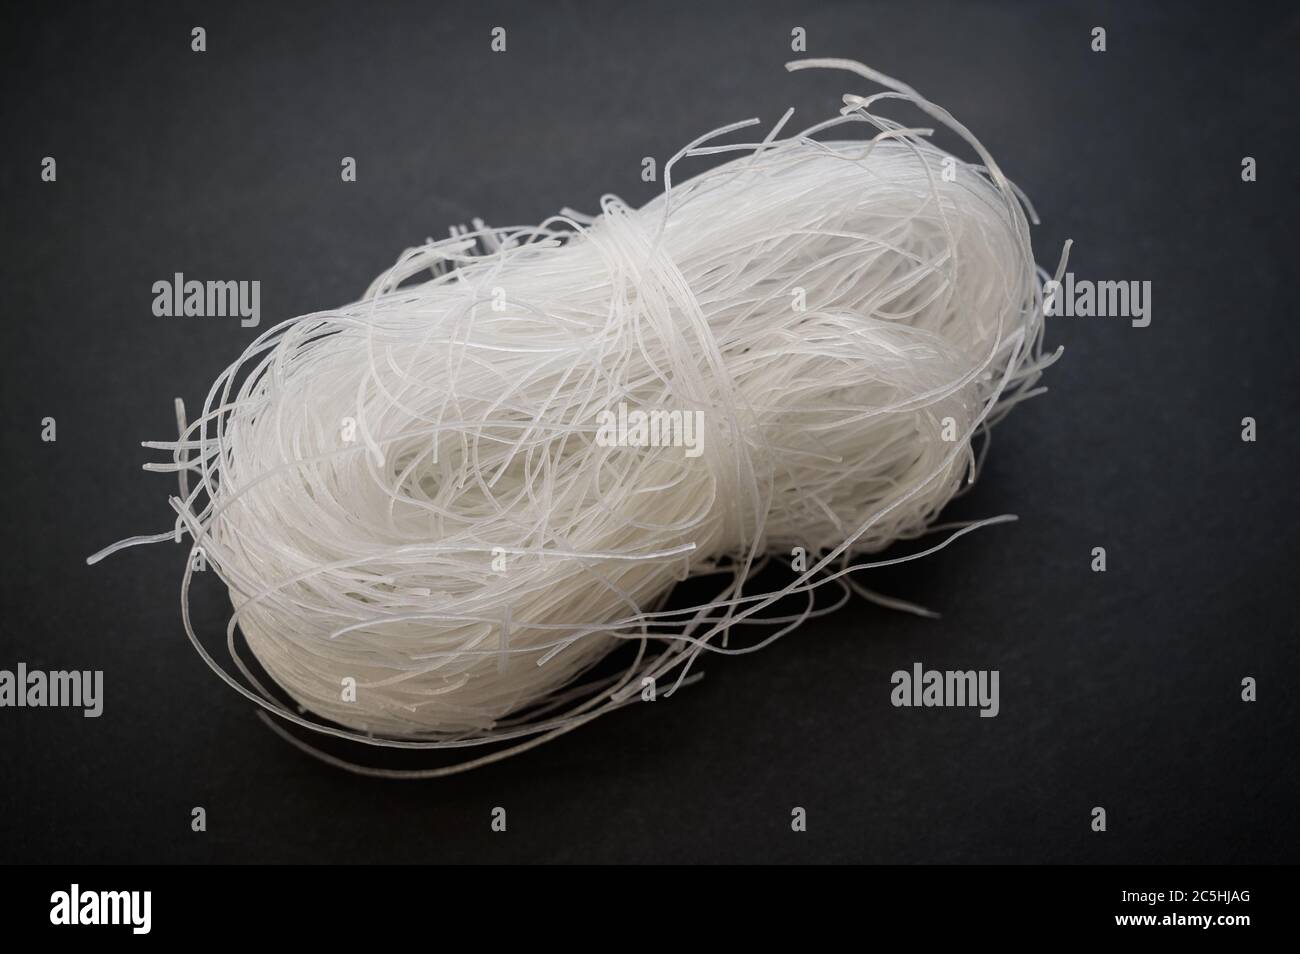 Cellophane noodles or fensi on black background. Stock Photo